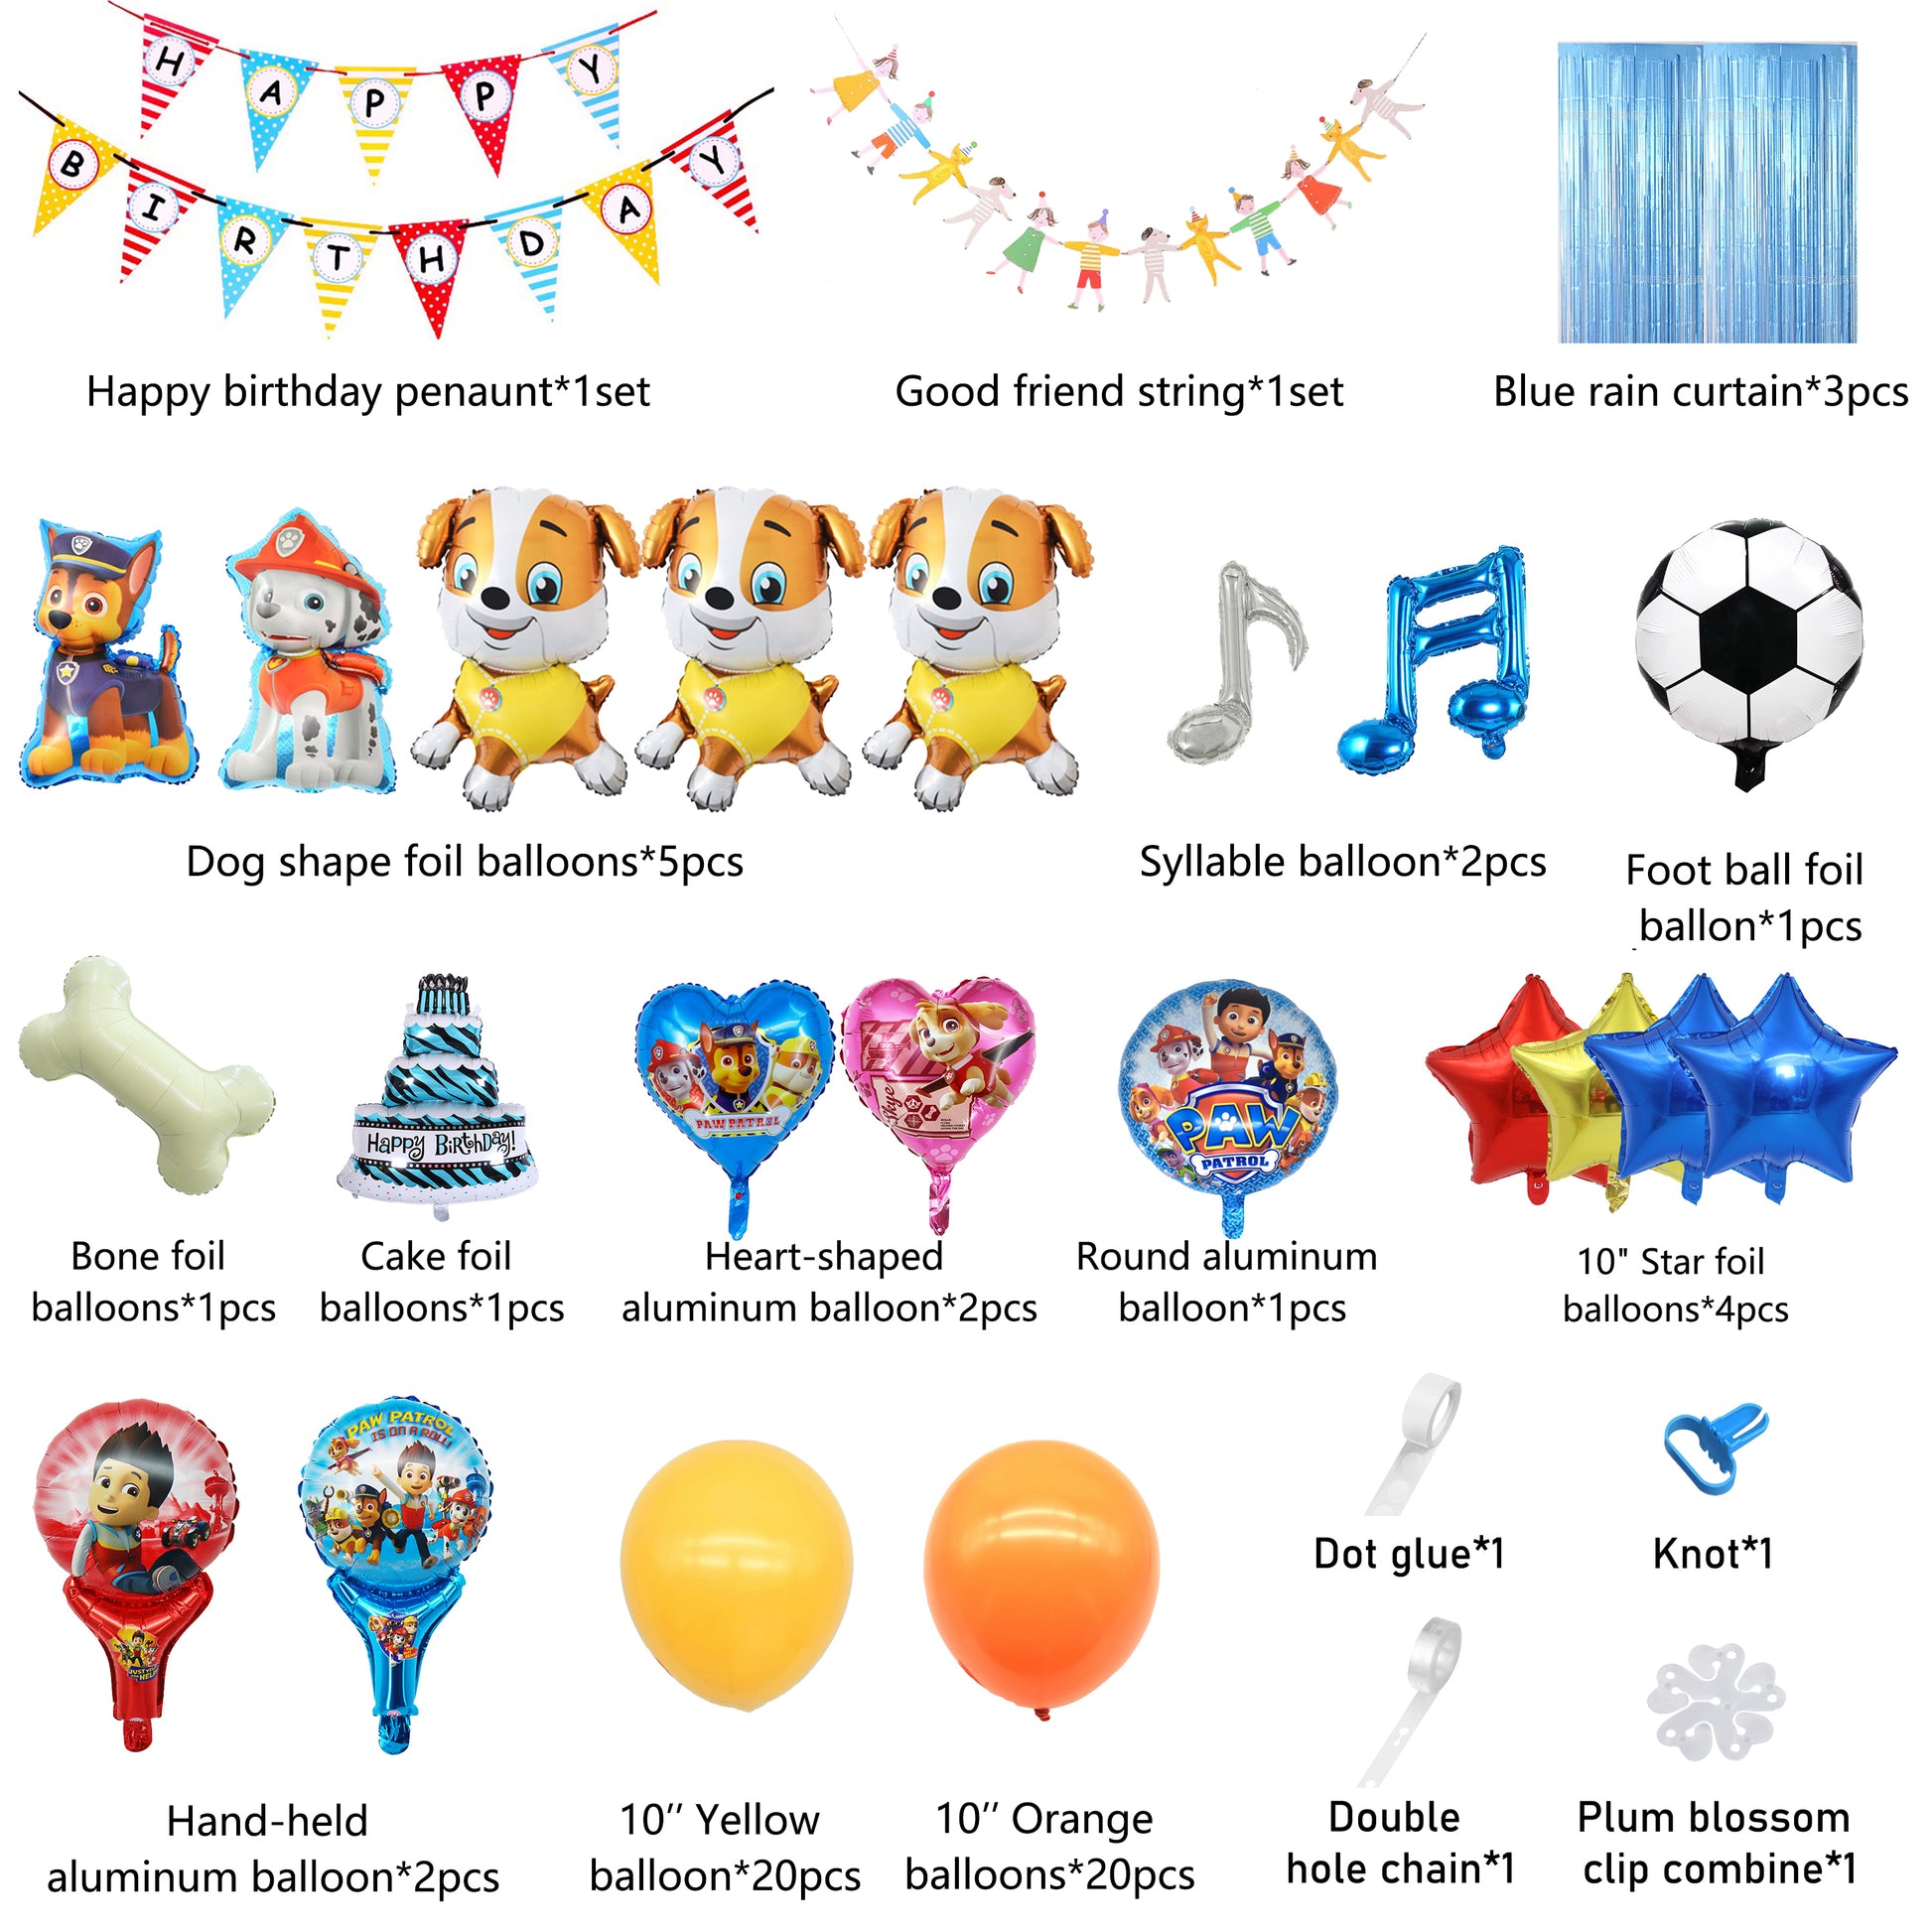 Paw Patrol Birthday Theme Decorations.